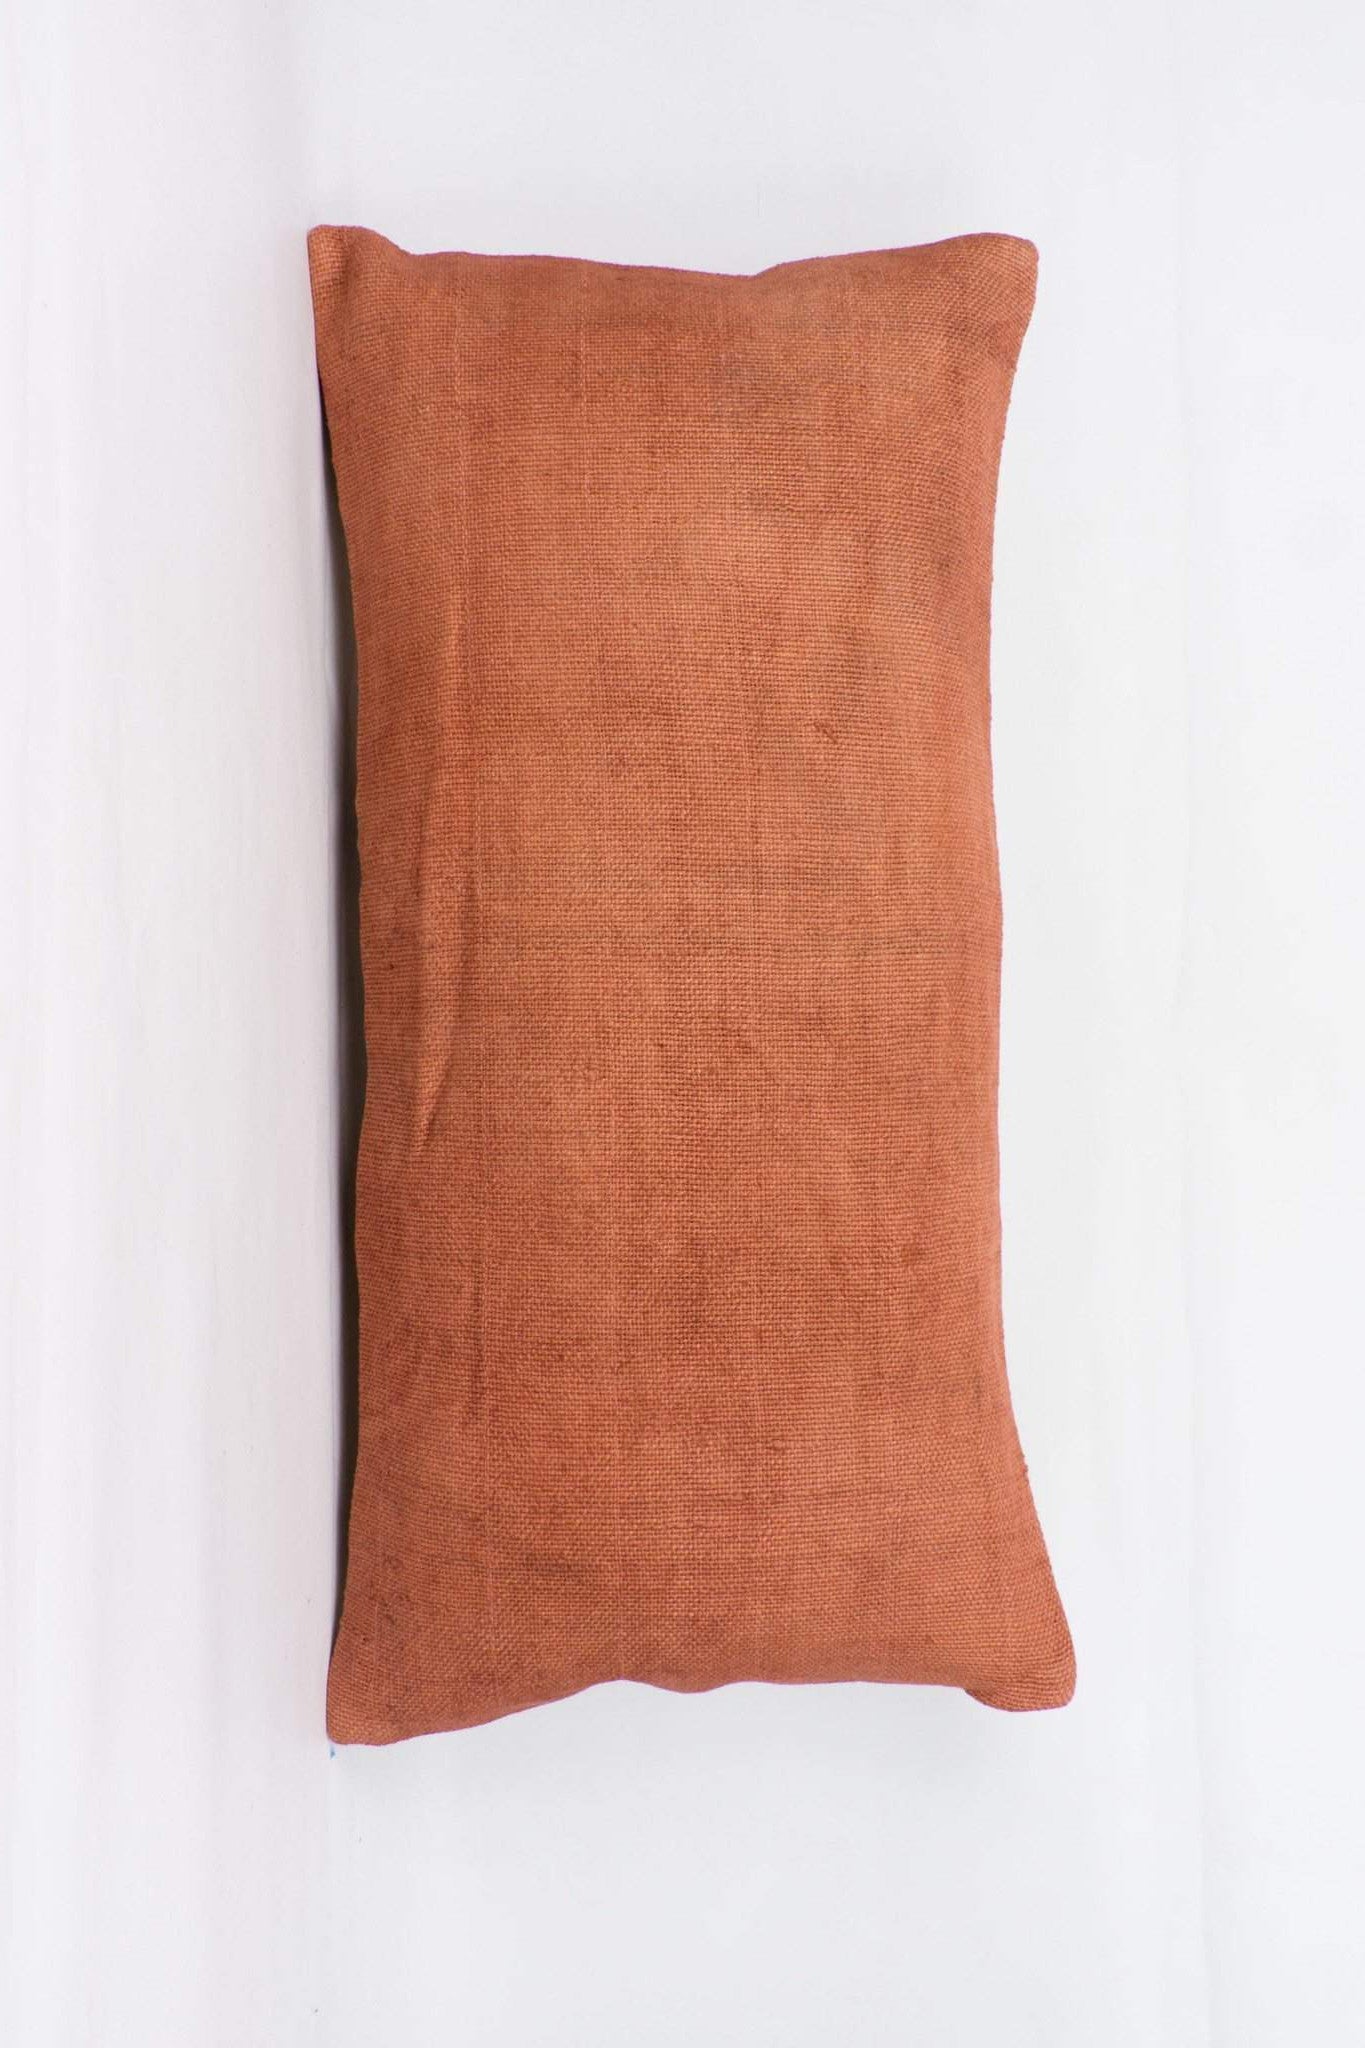 Plain Brown Kilim Pillow Cover 12x24 4197 - kilimpillowstore
 - 1